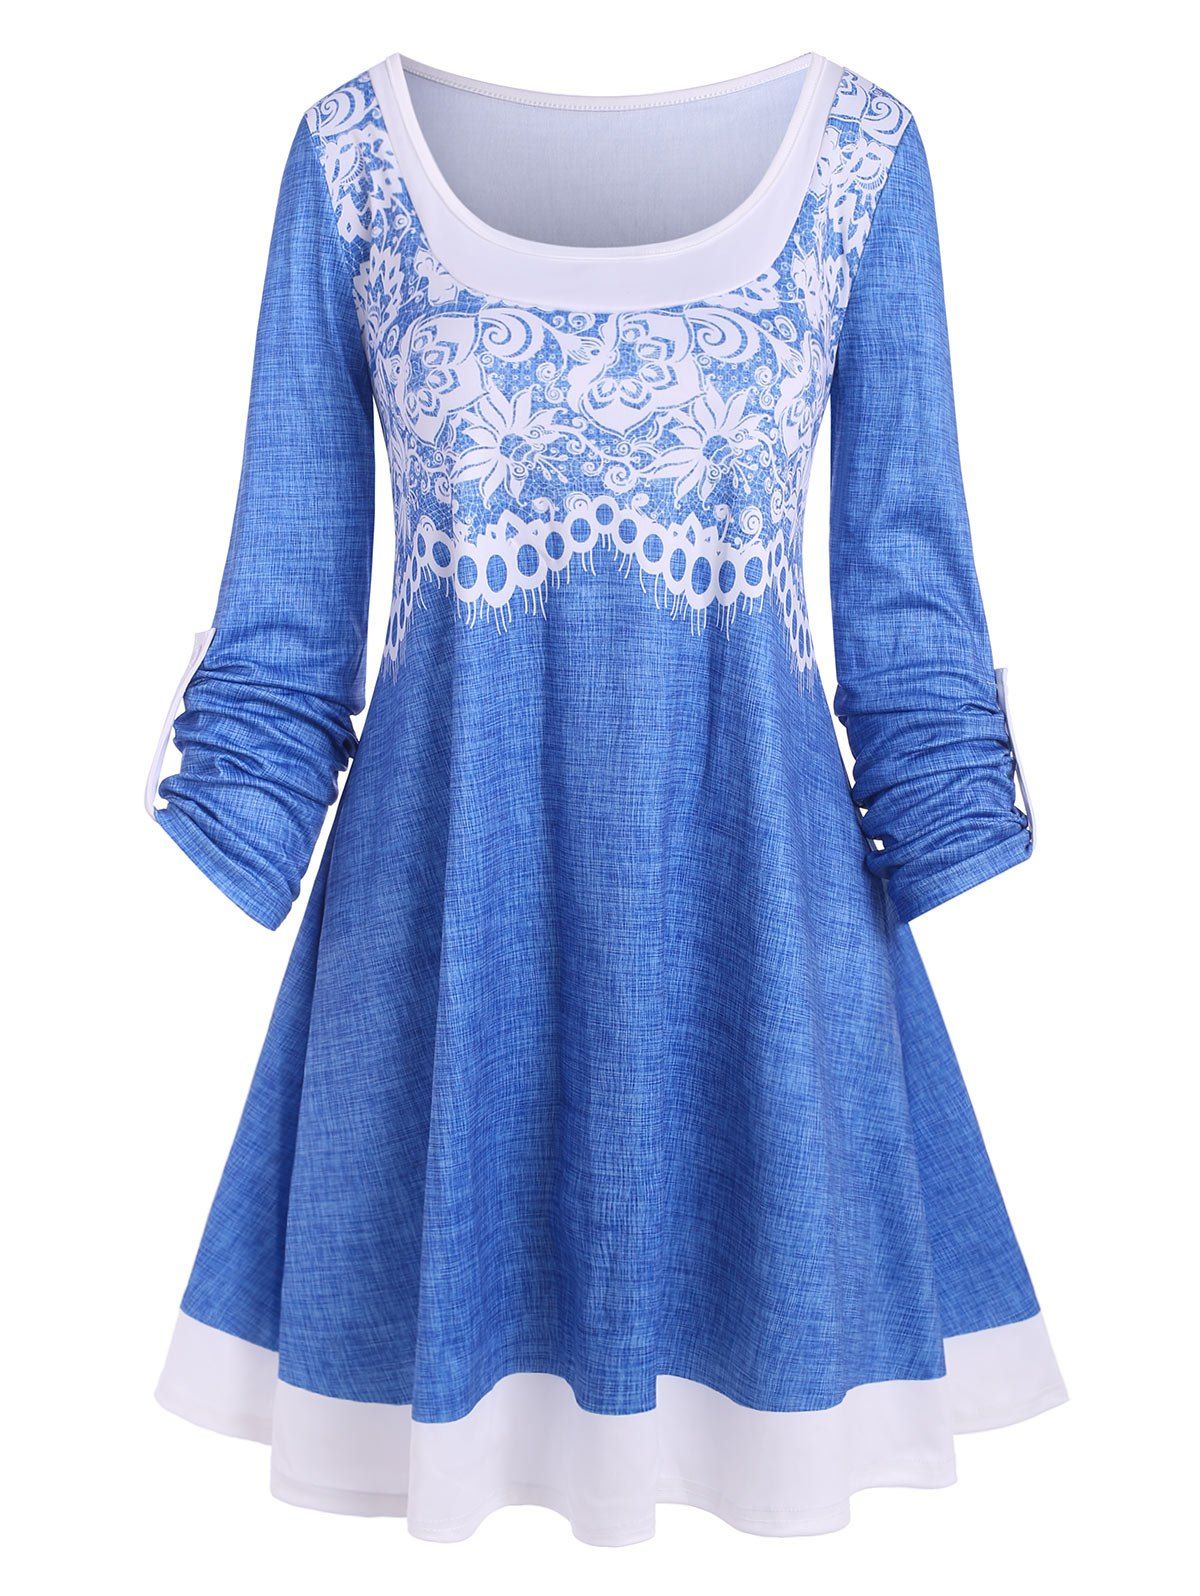 3D Denim Floral Print Roll Up Sleeve Tunic Dress - BLUE XXXL